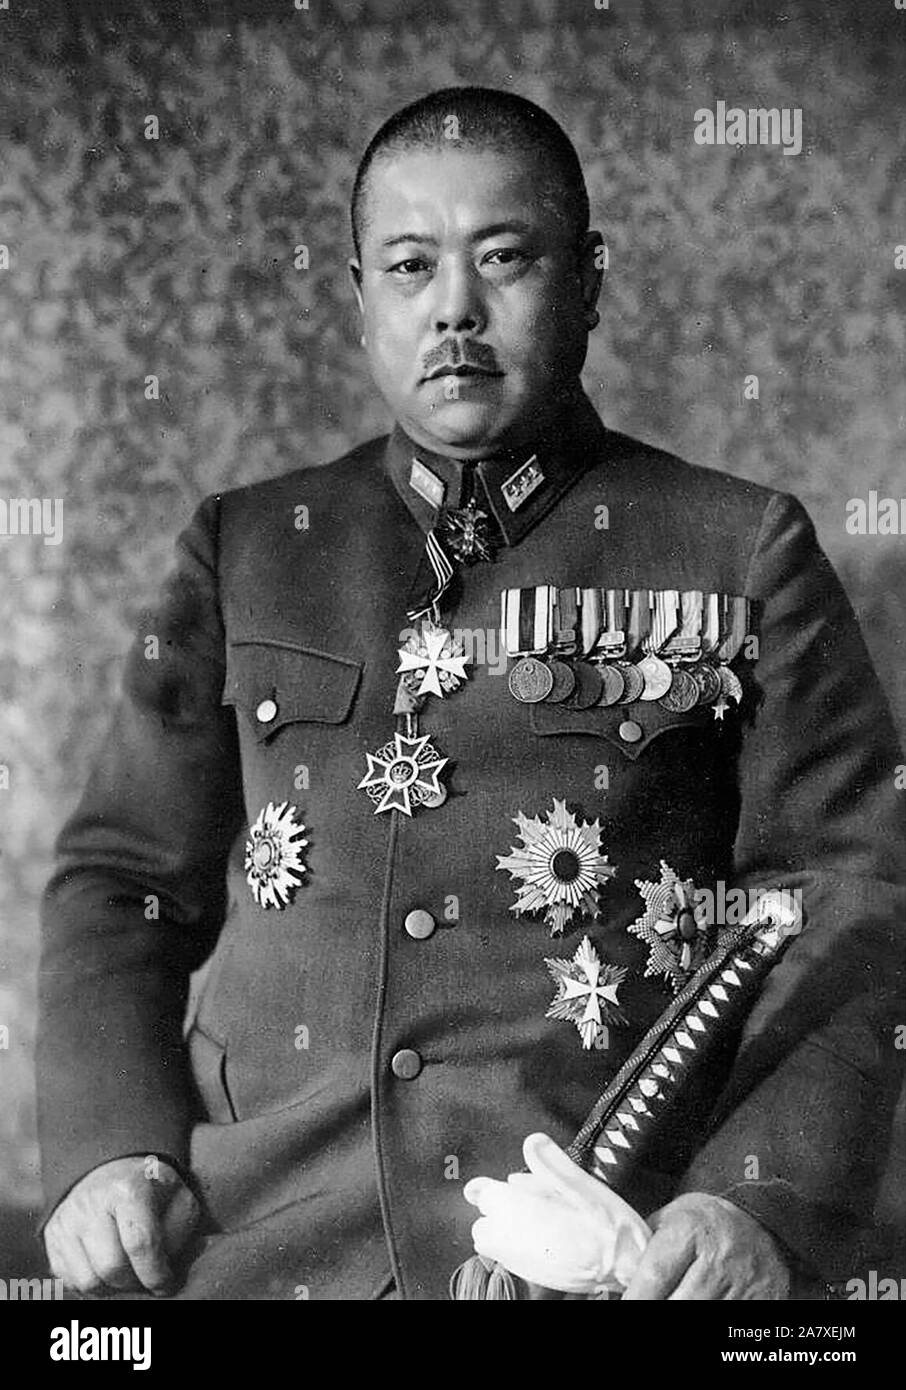 Imperial japanese army fotografías e imágenes de alta resolución - Alamy